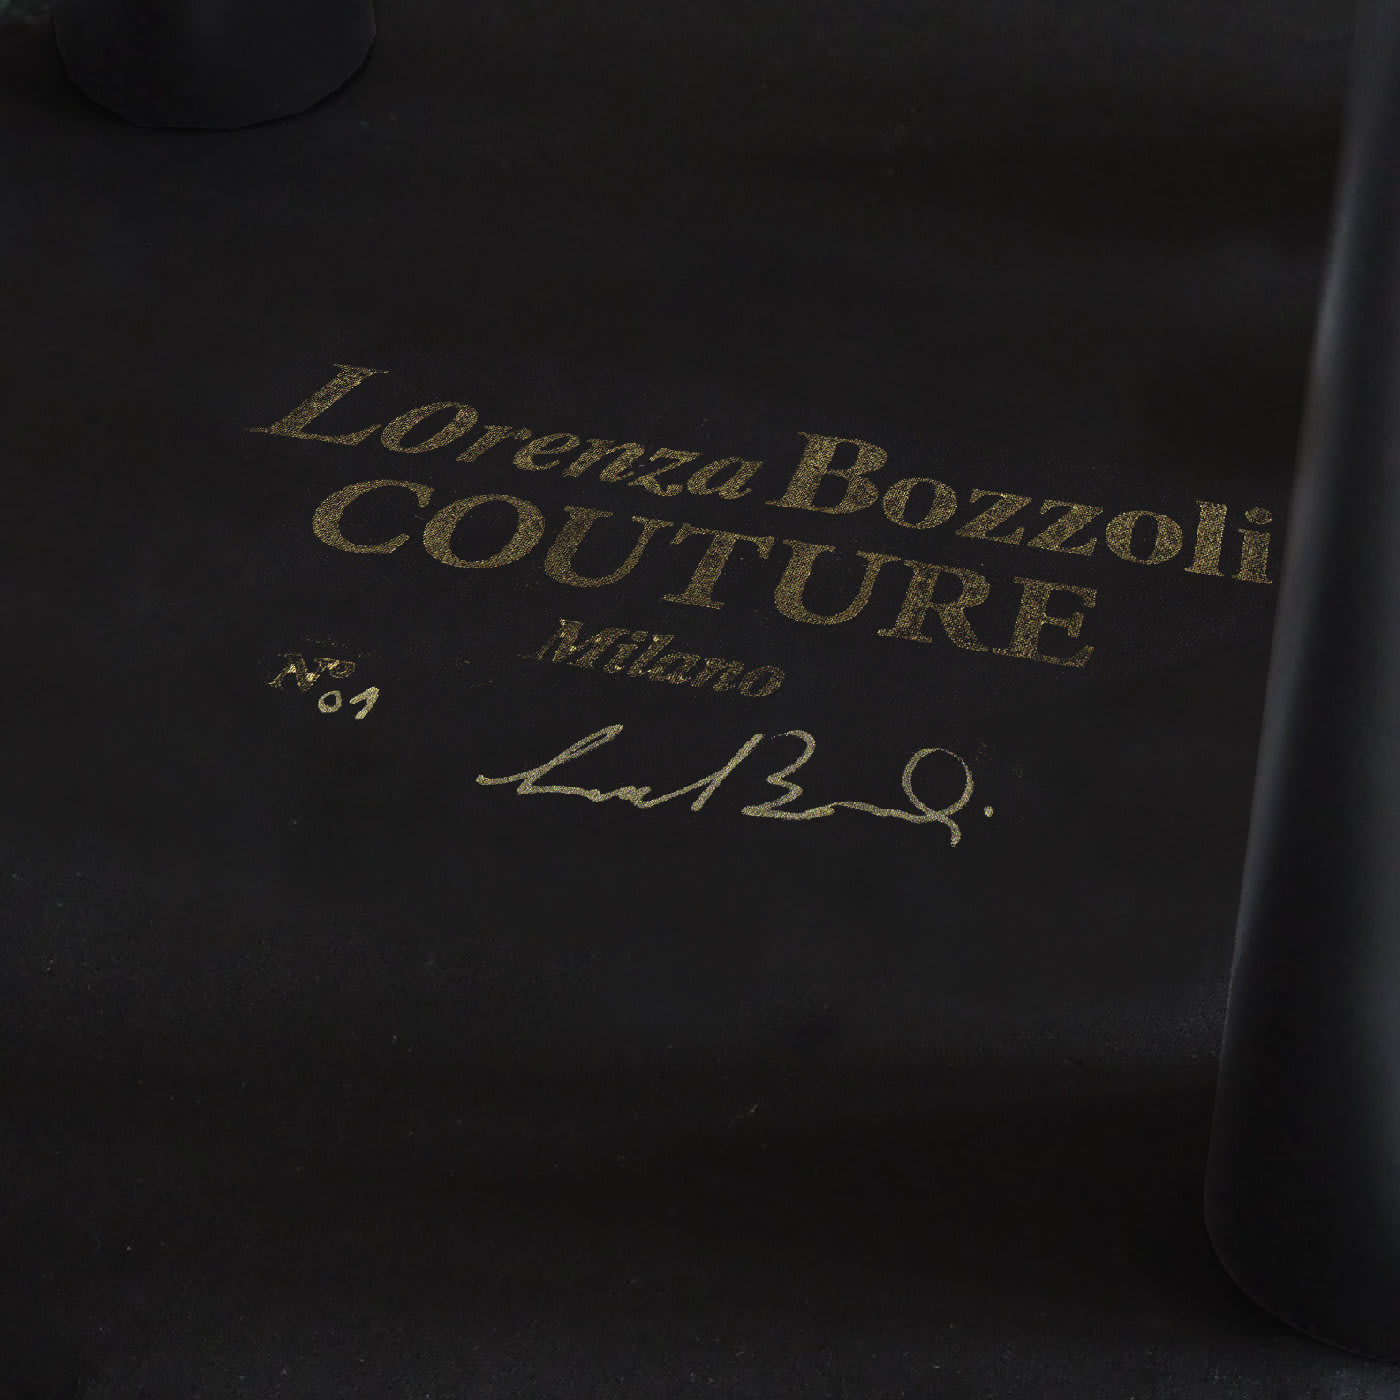 Couture Turquoise Pouf - Lorenza Bozzoli Design